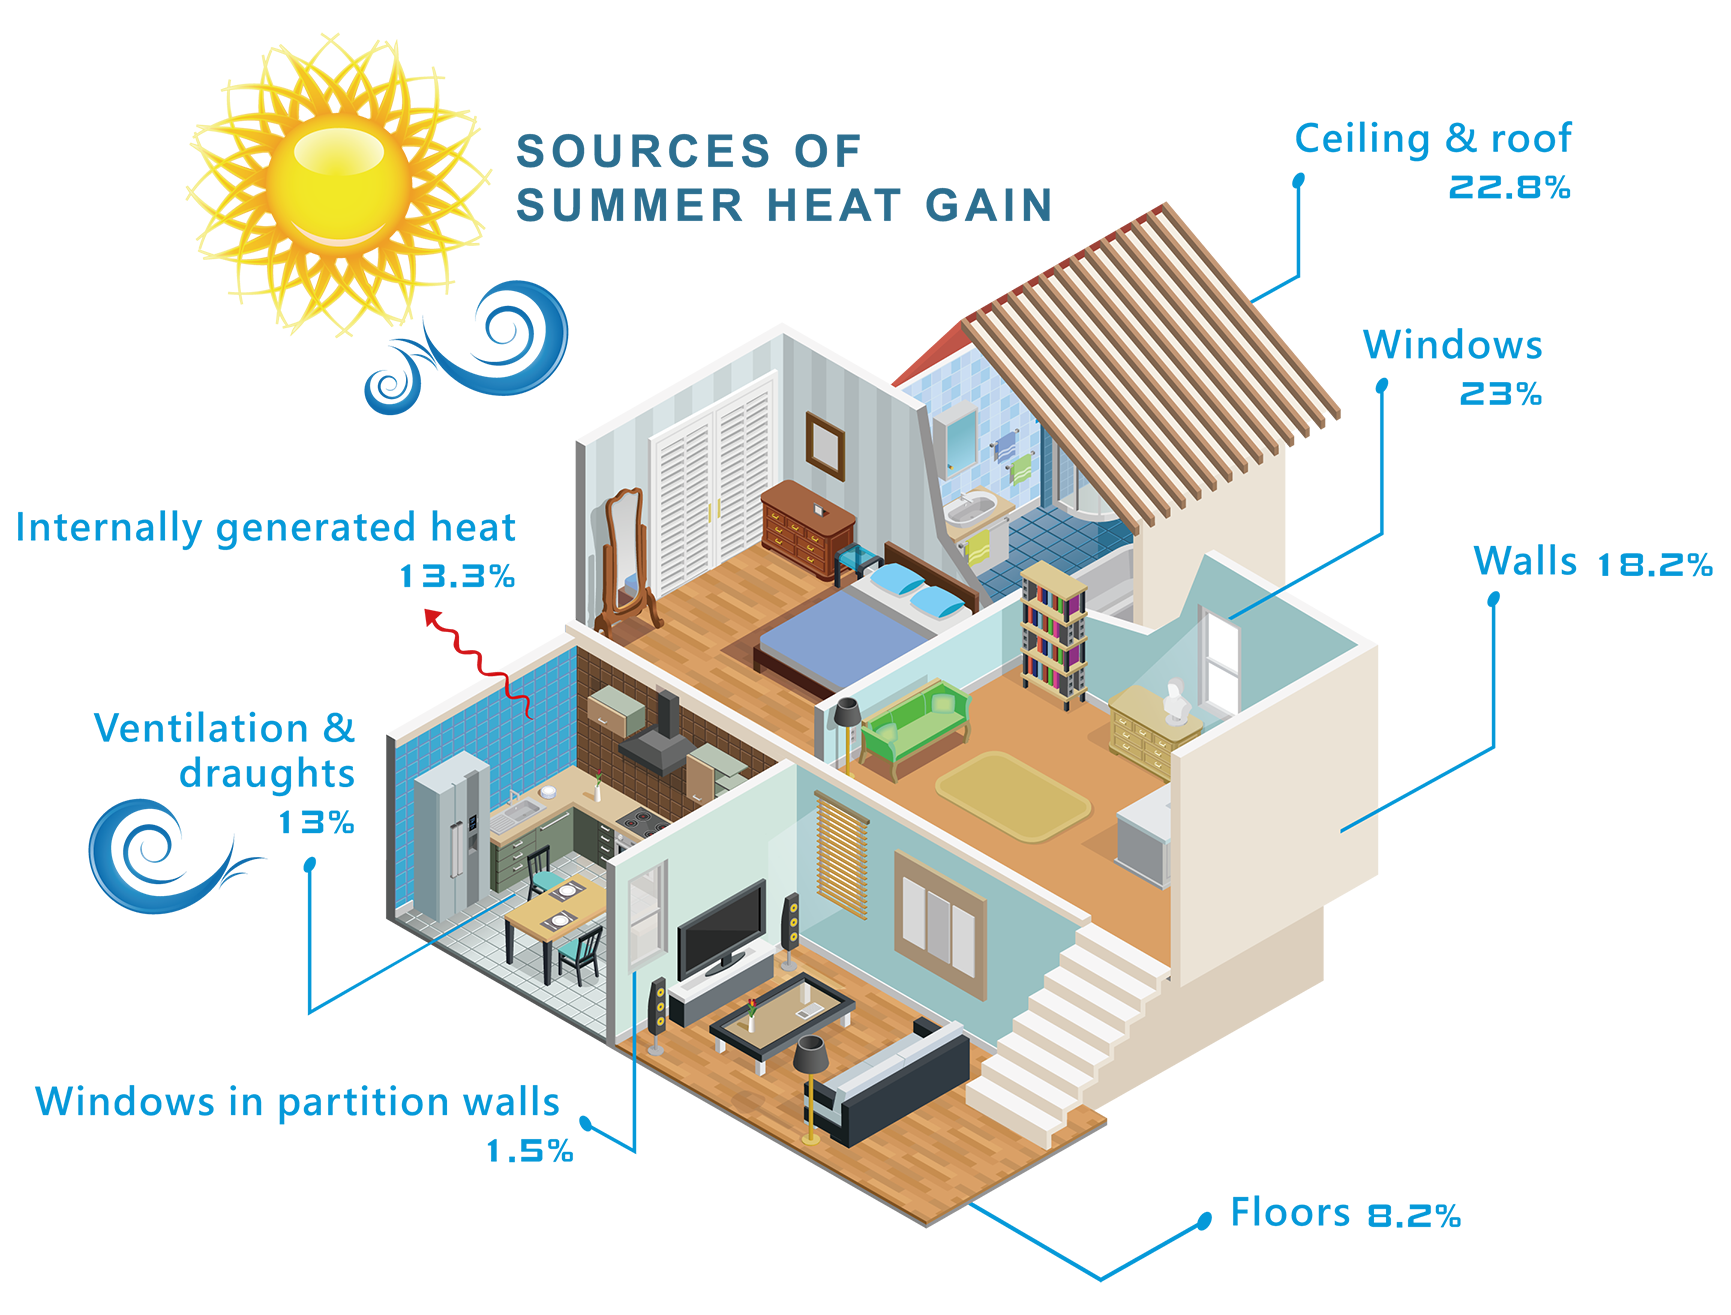 Heat conducted into houses 降低建築物能熱能能耗(綠建築)